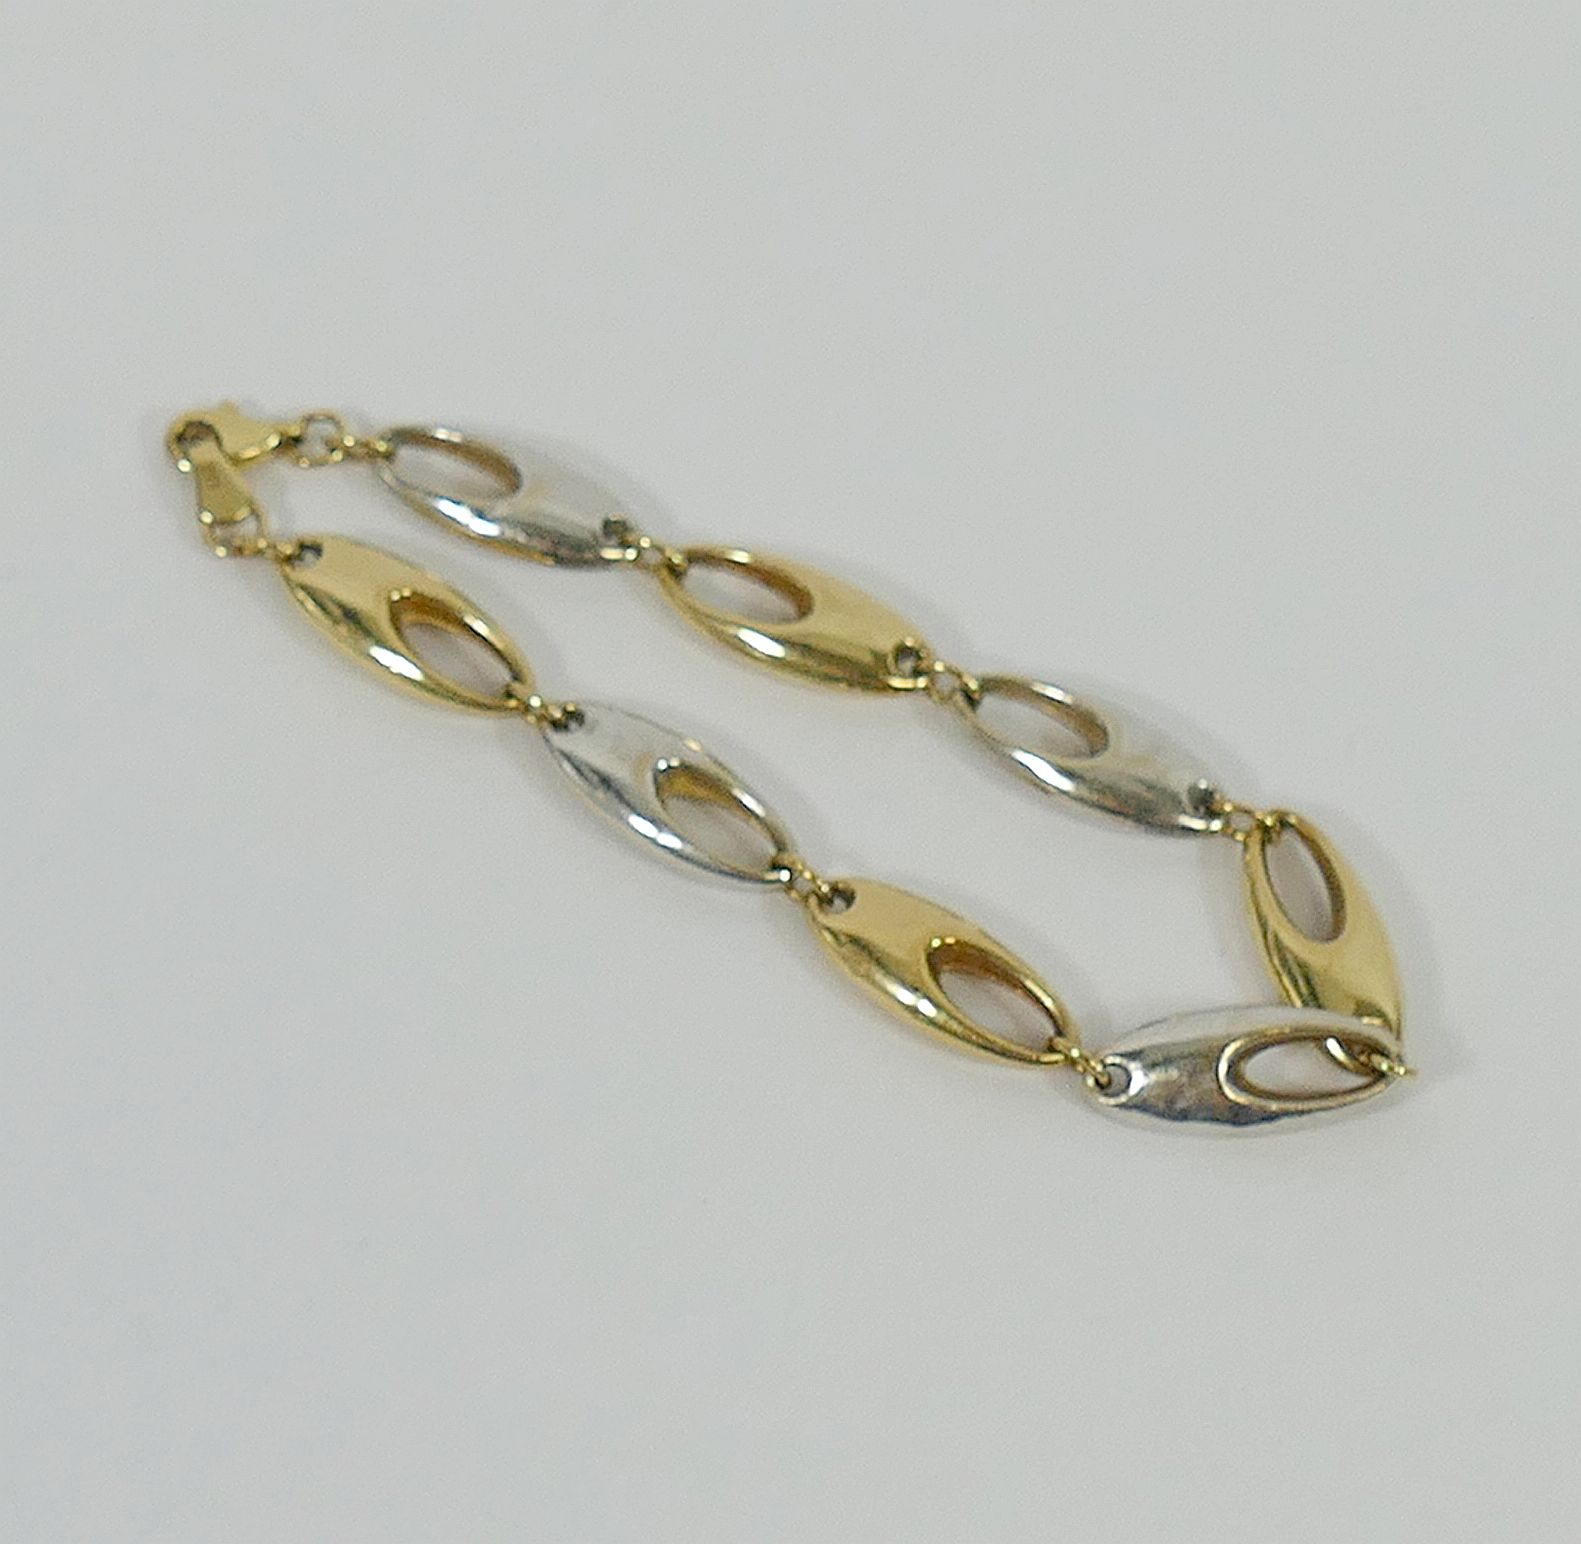 A 9 carat gold, bi-colour bracelet, with hollow links,